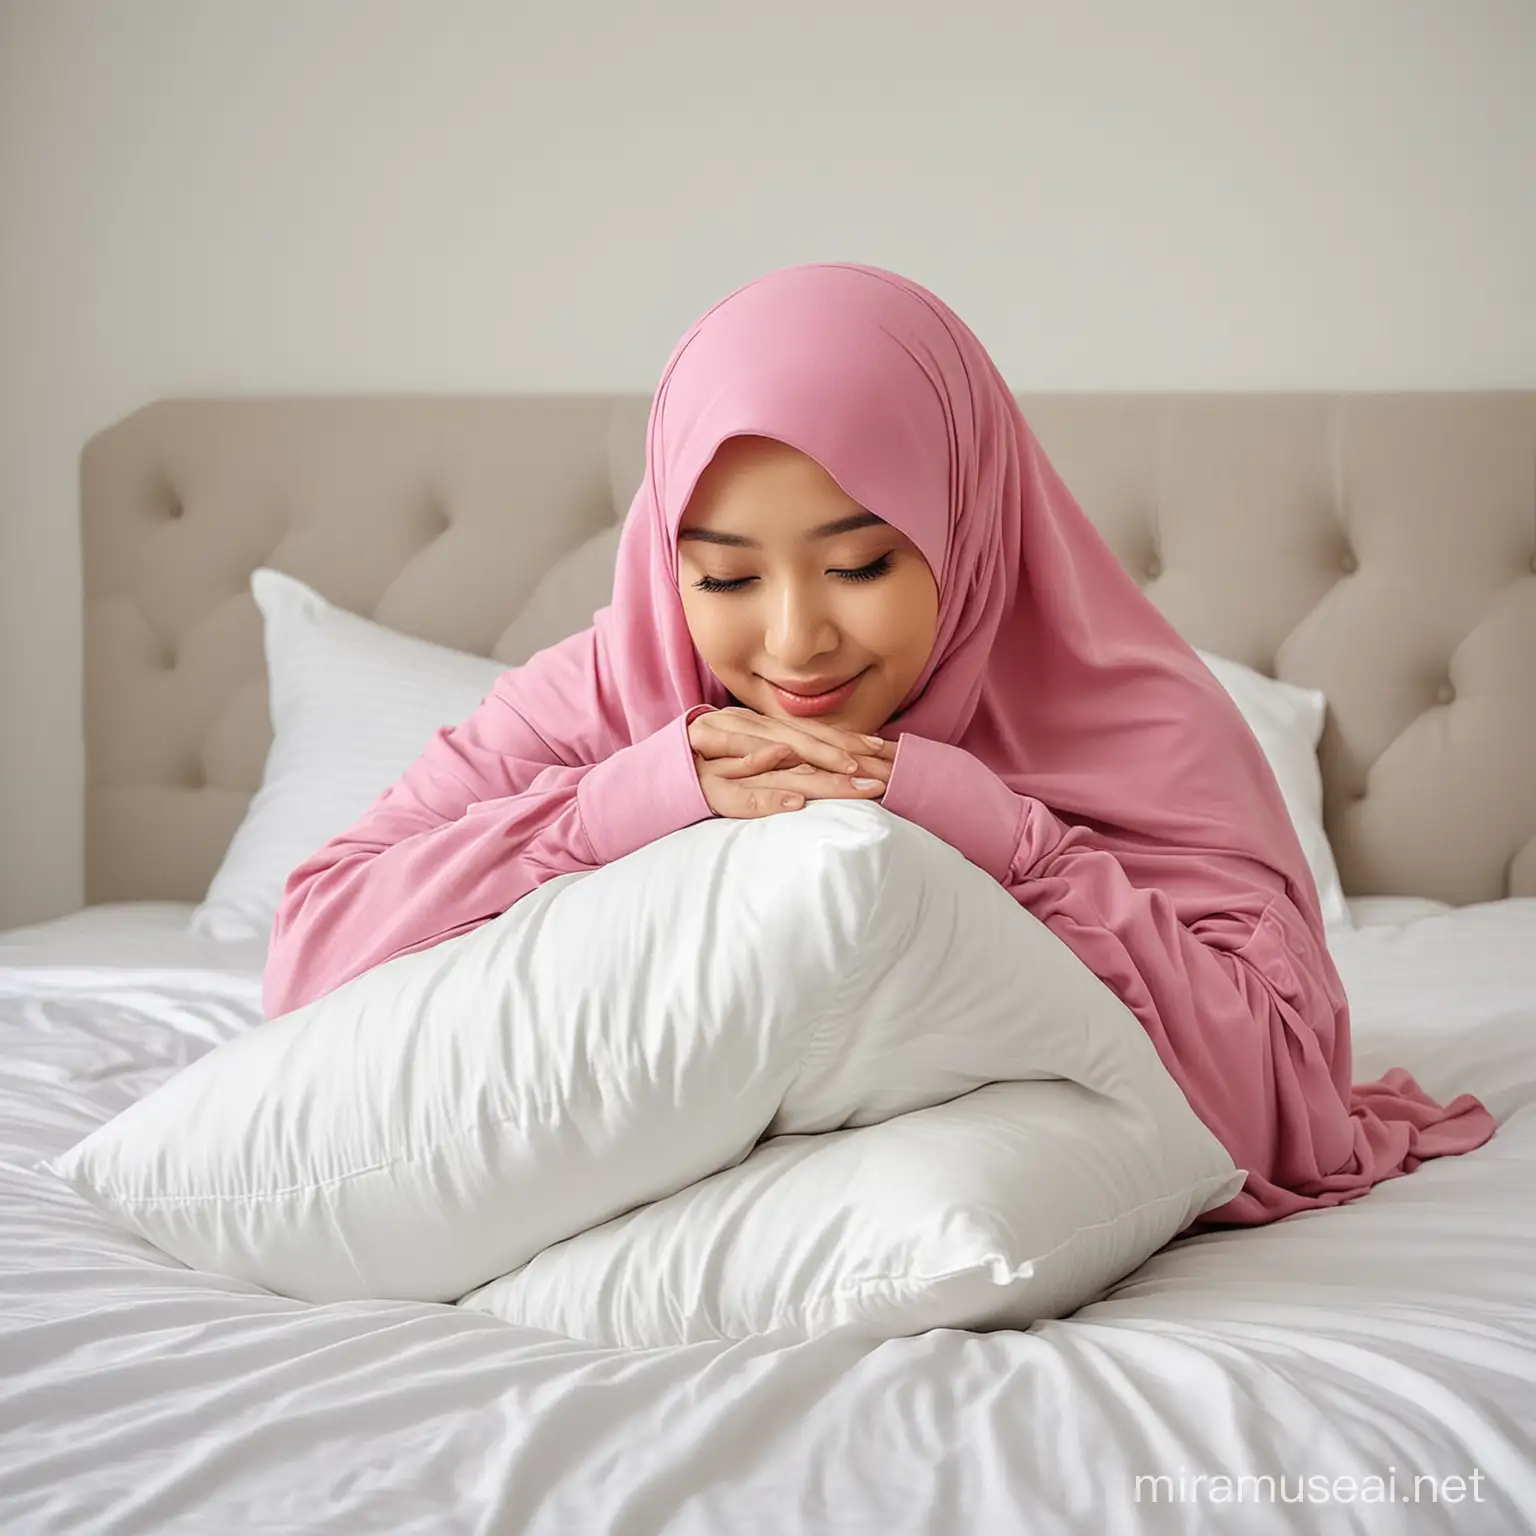 Asian Hijab Girl Hugging Pillow in Bed